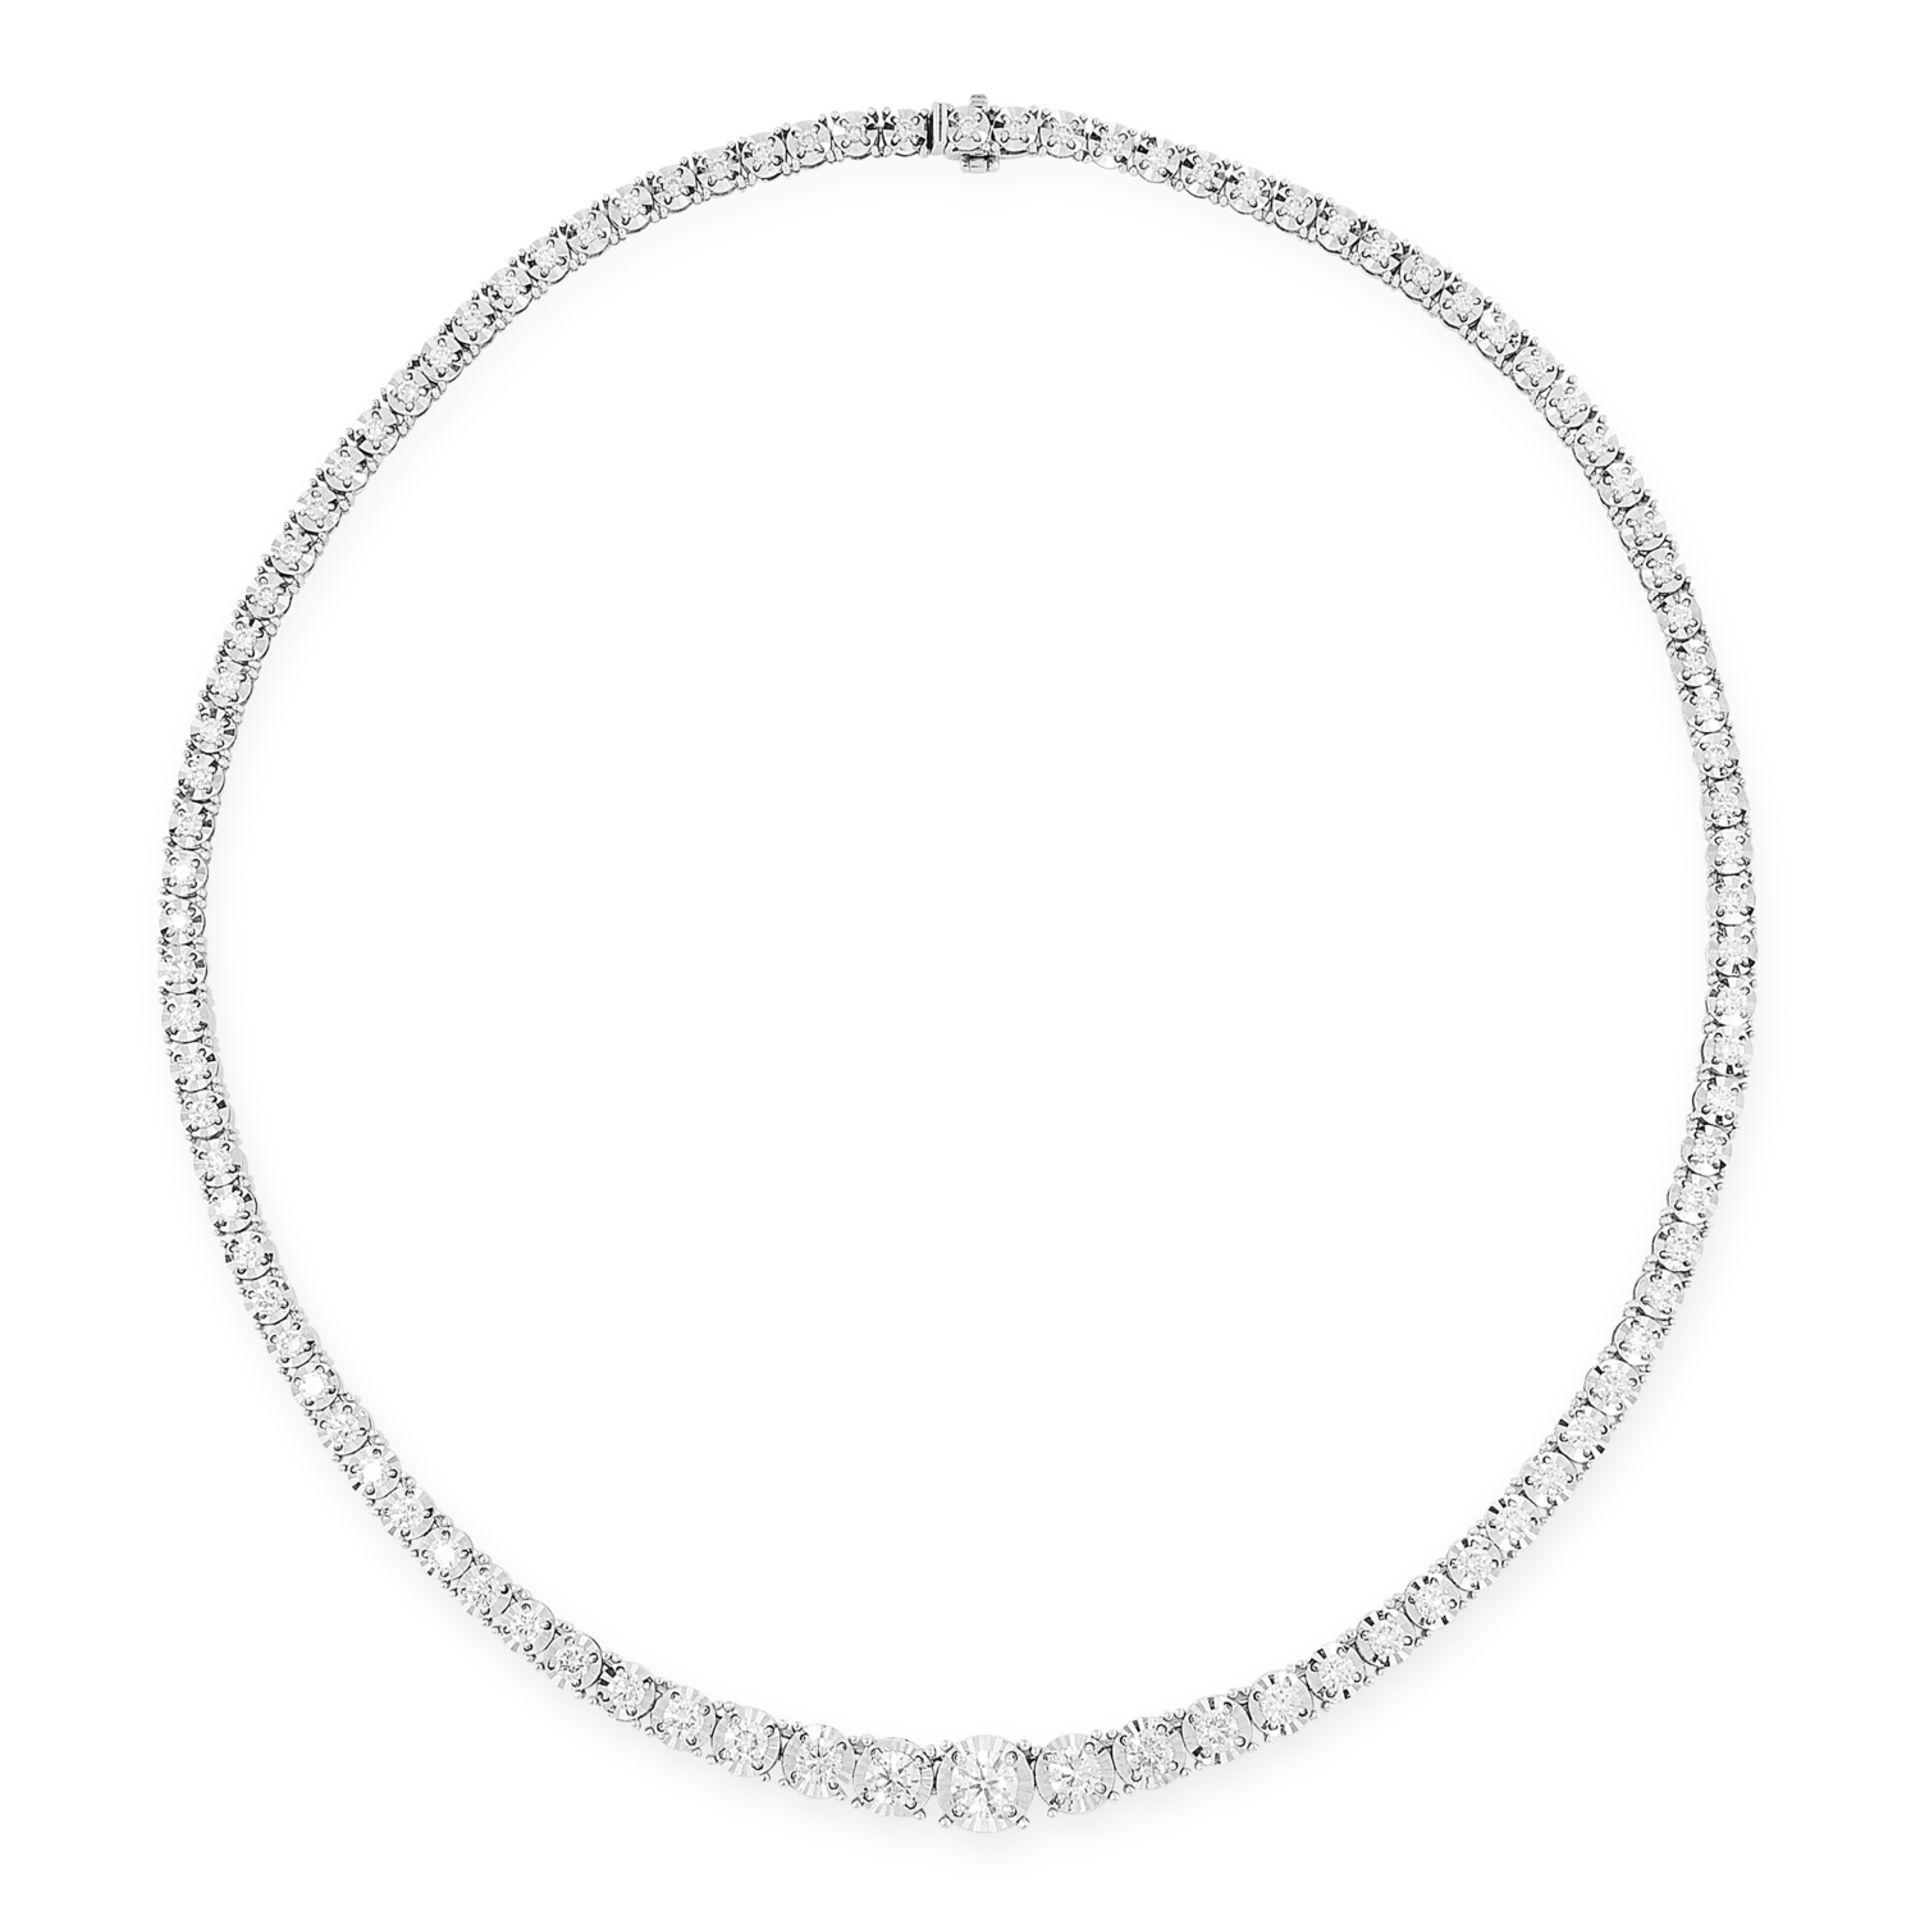 A 6.55 CARAT DIAMOND LINE NECKLACE comprising a single row of graduated round cut diamonds totalling